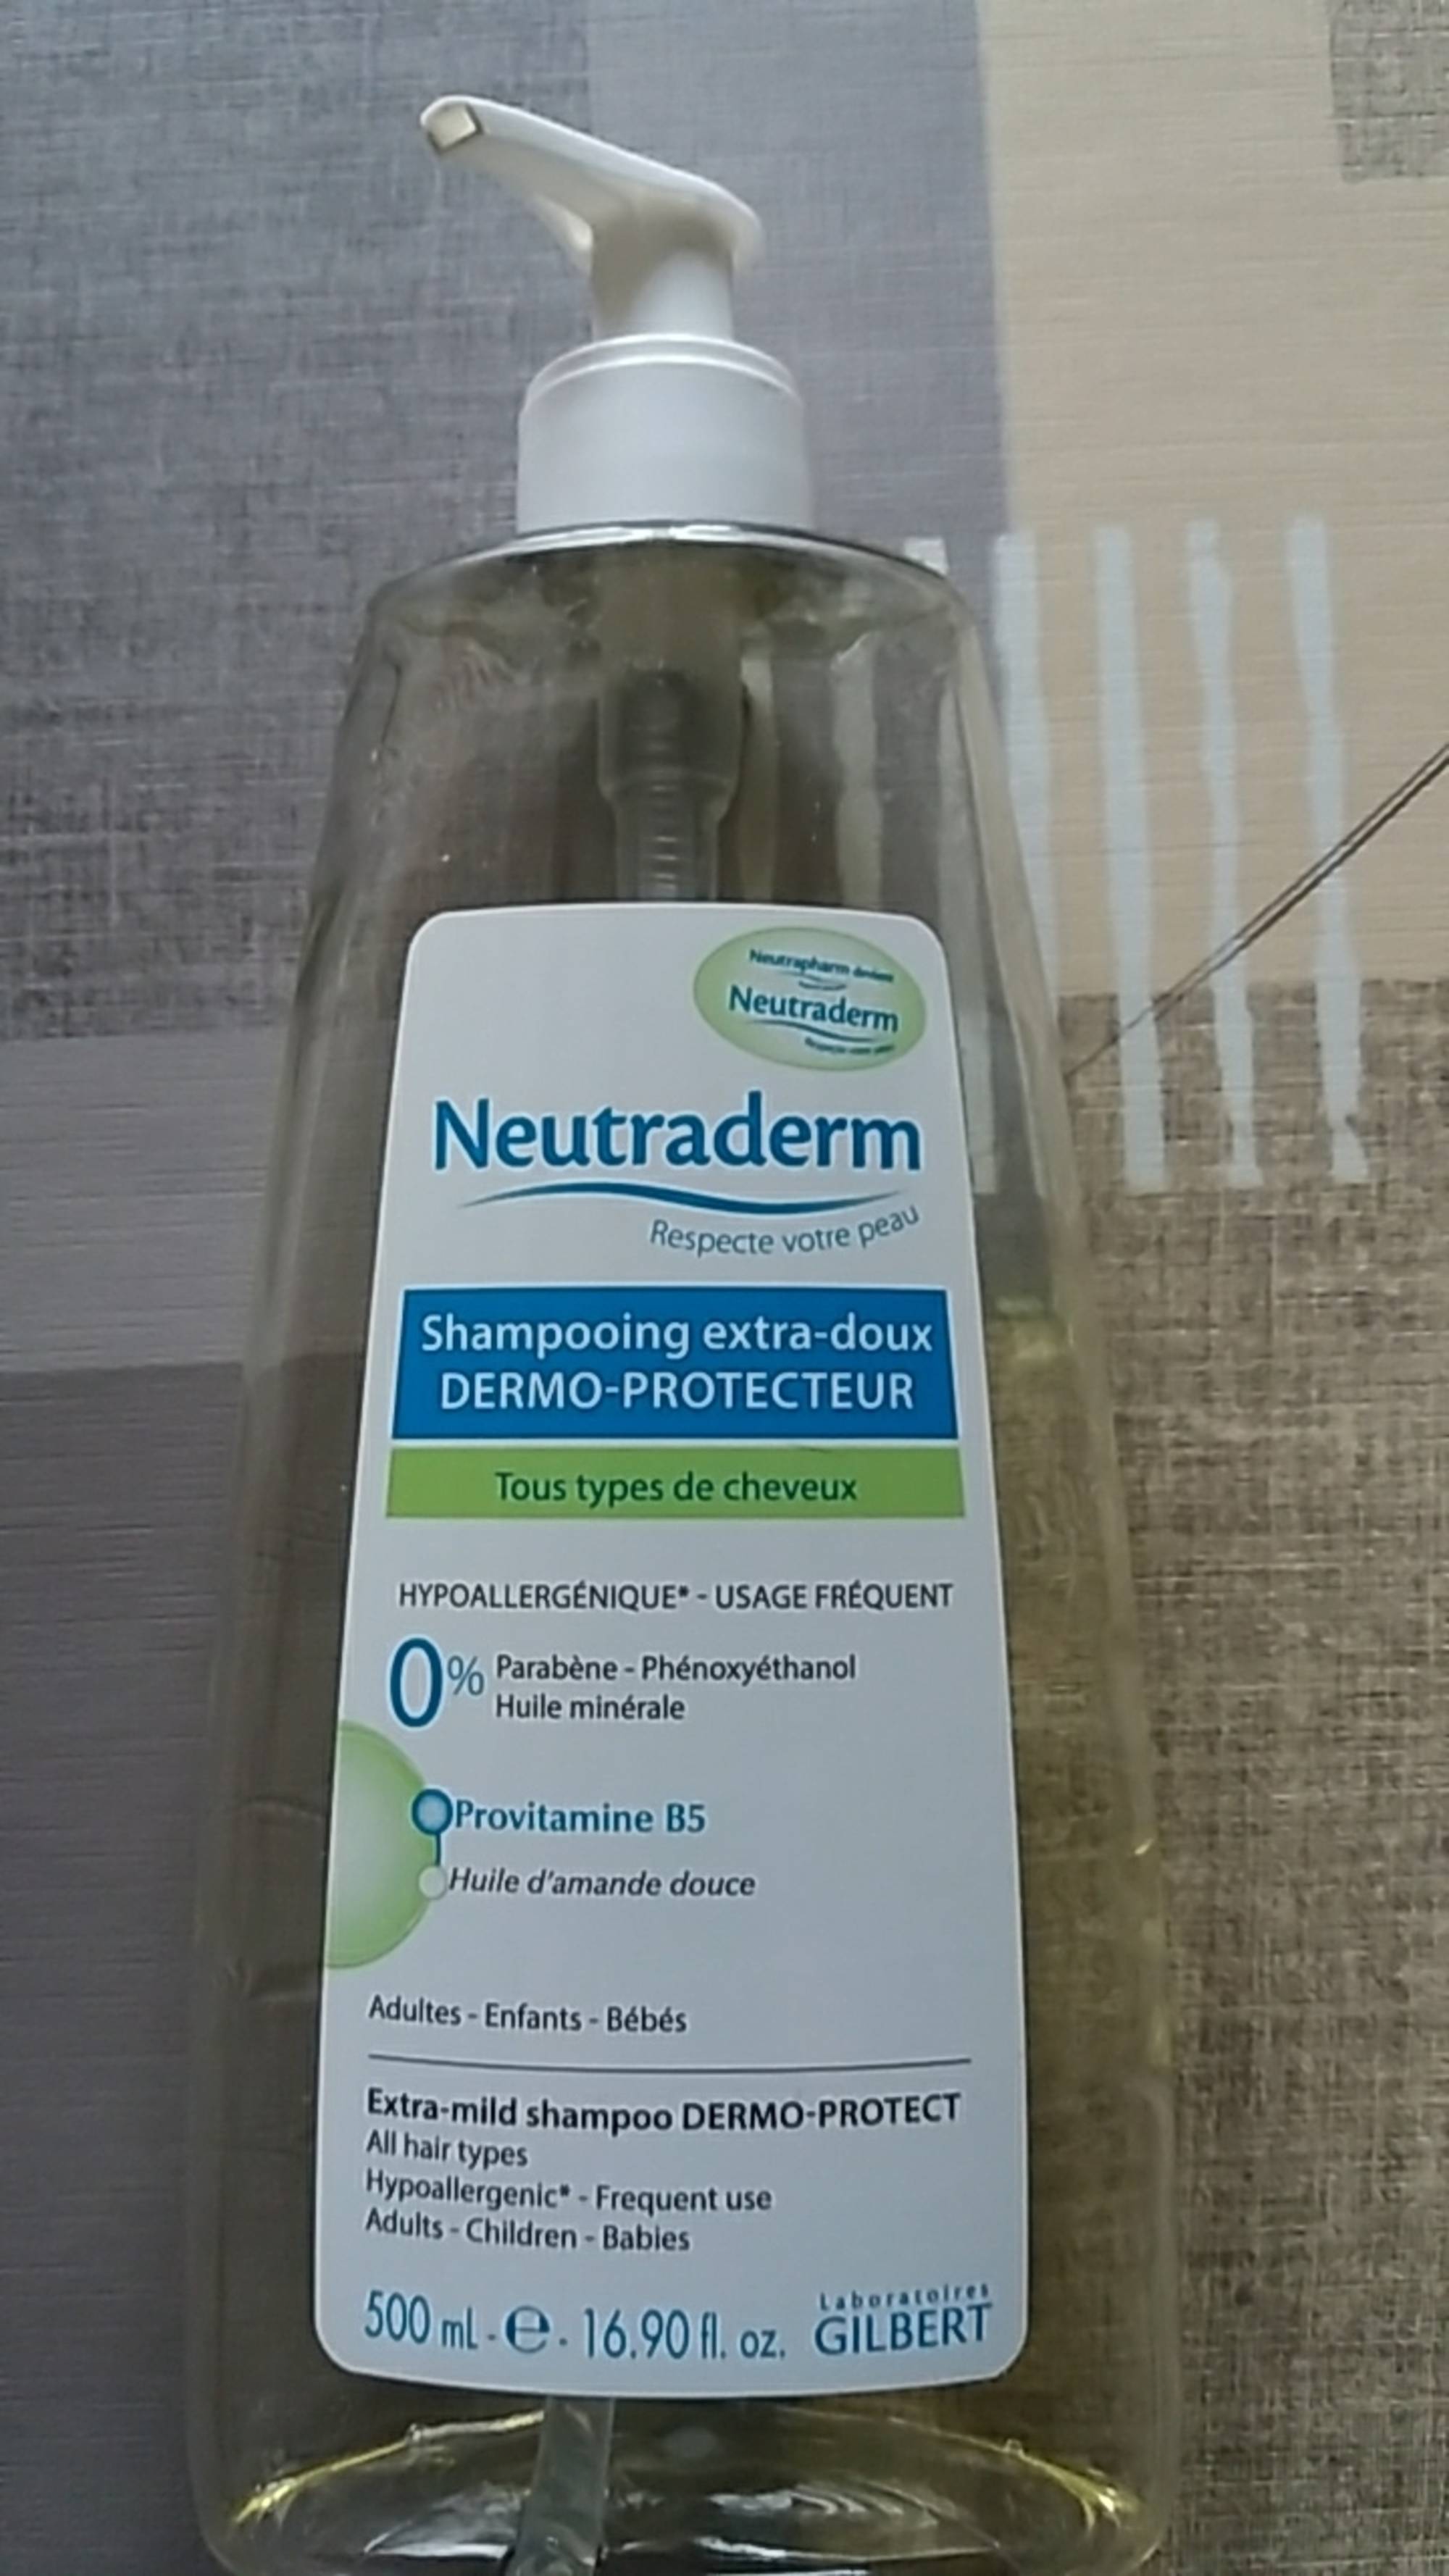 GILBERT LABORATOIRES - Neutraderm - Shampooing extra doux dermo-protecteur